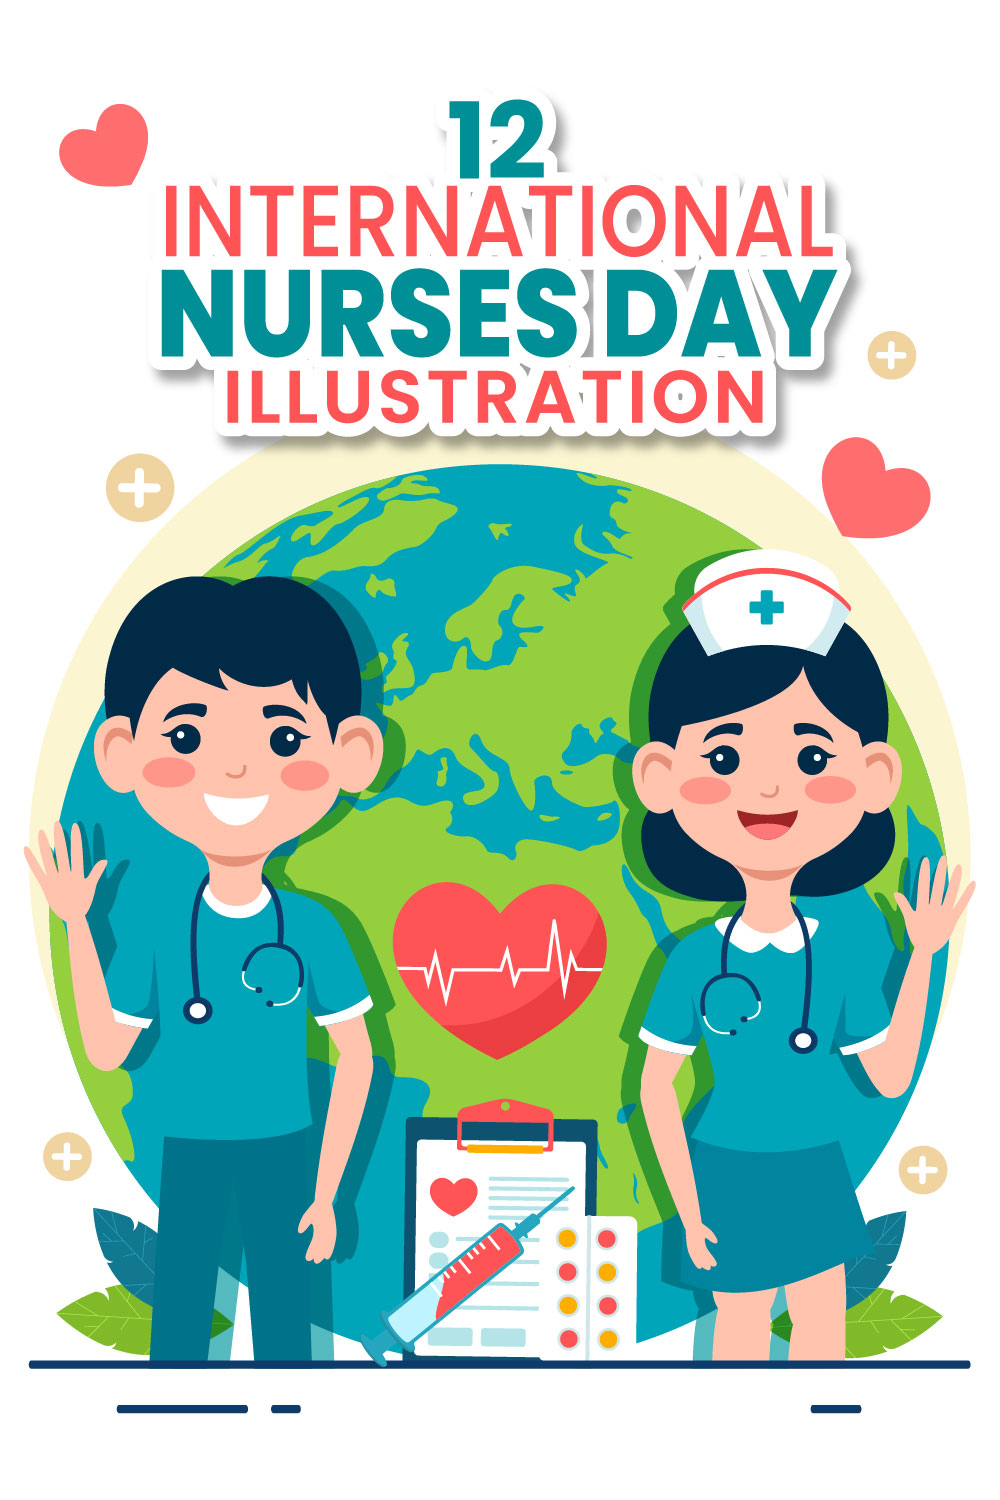 12 International Nurses Day Illustration pinterest preview image.